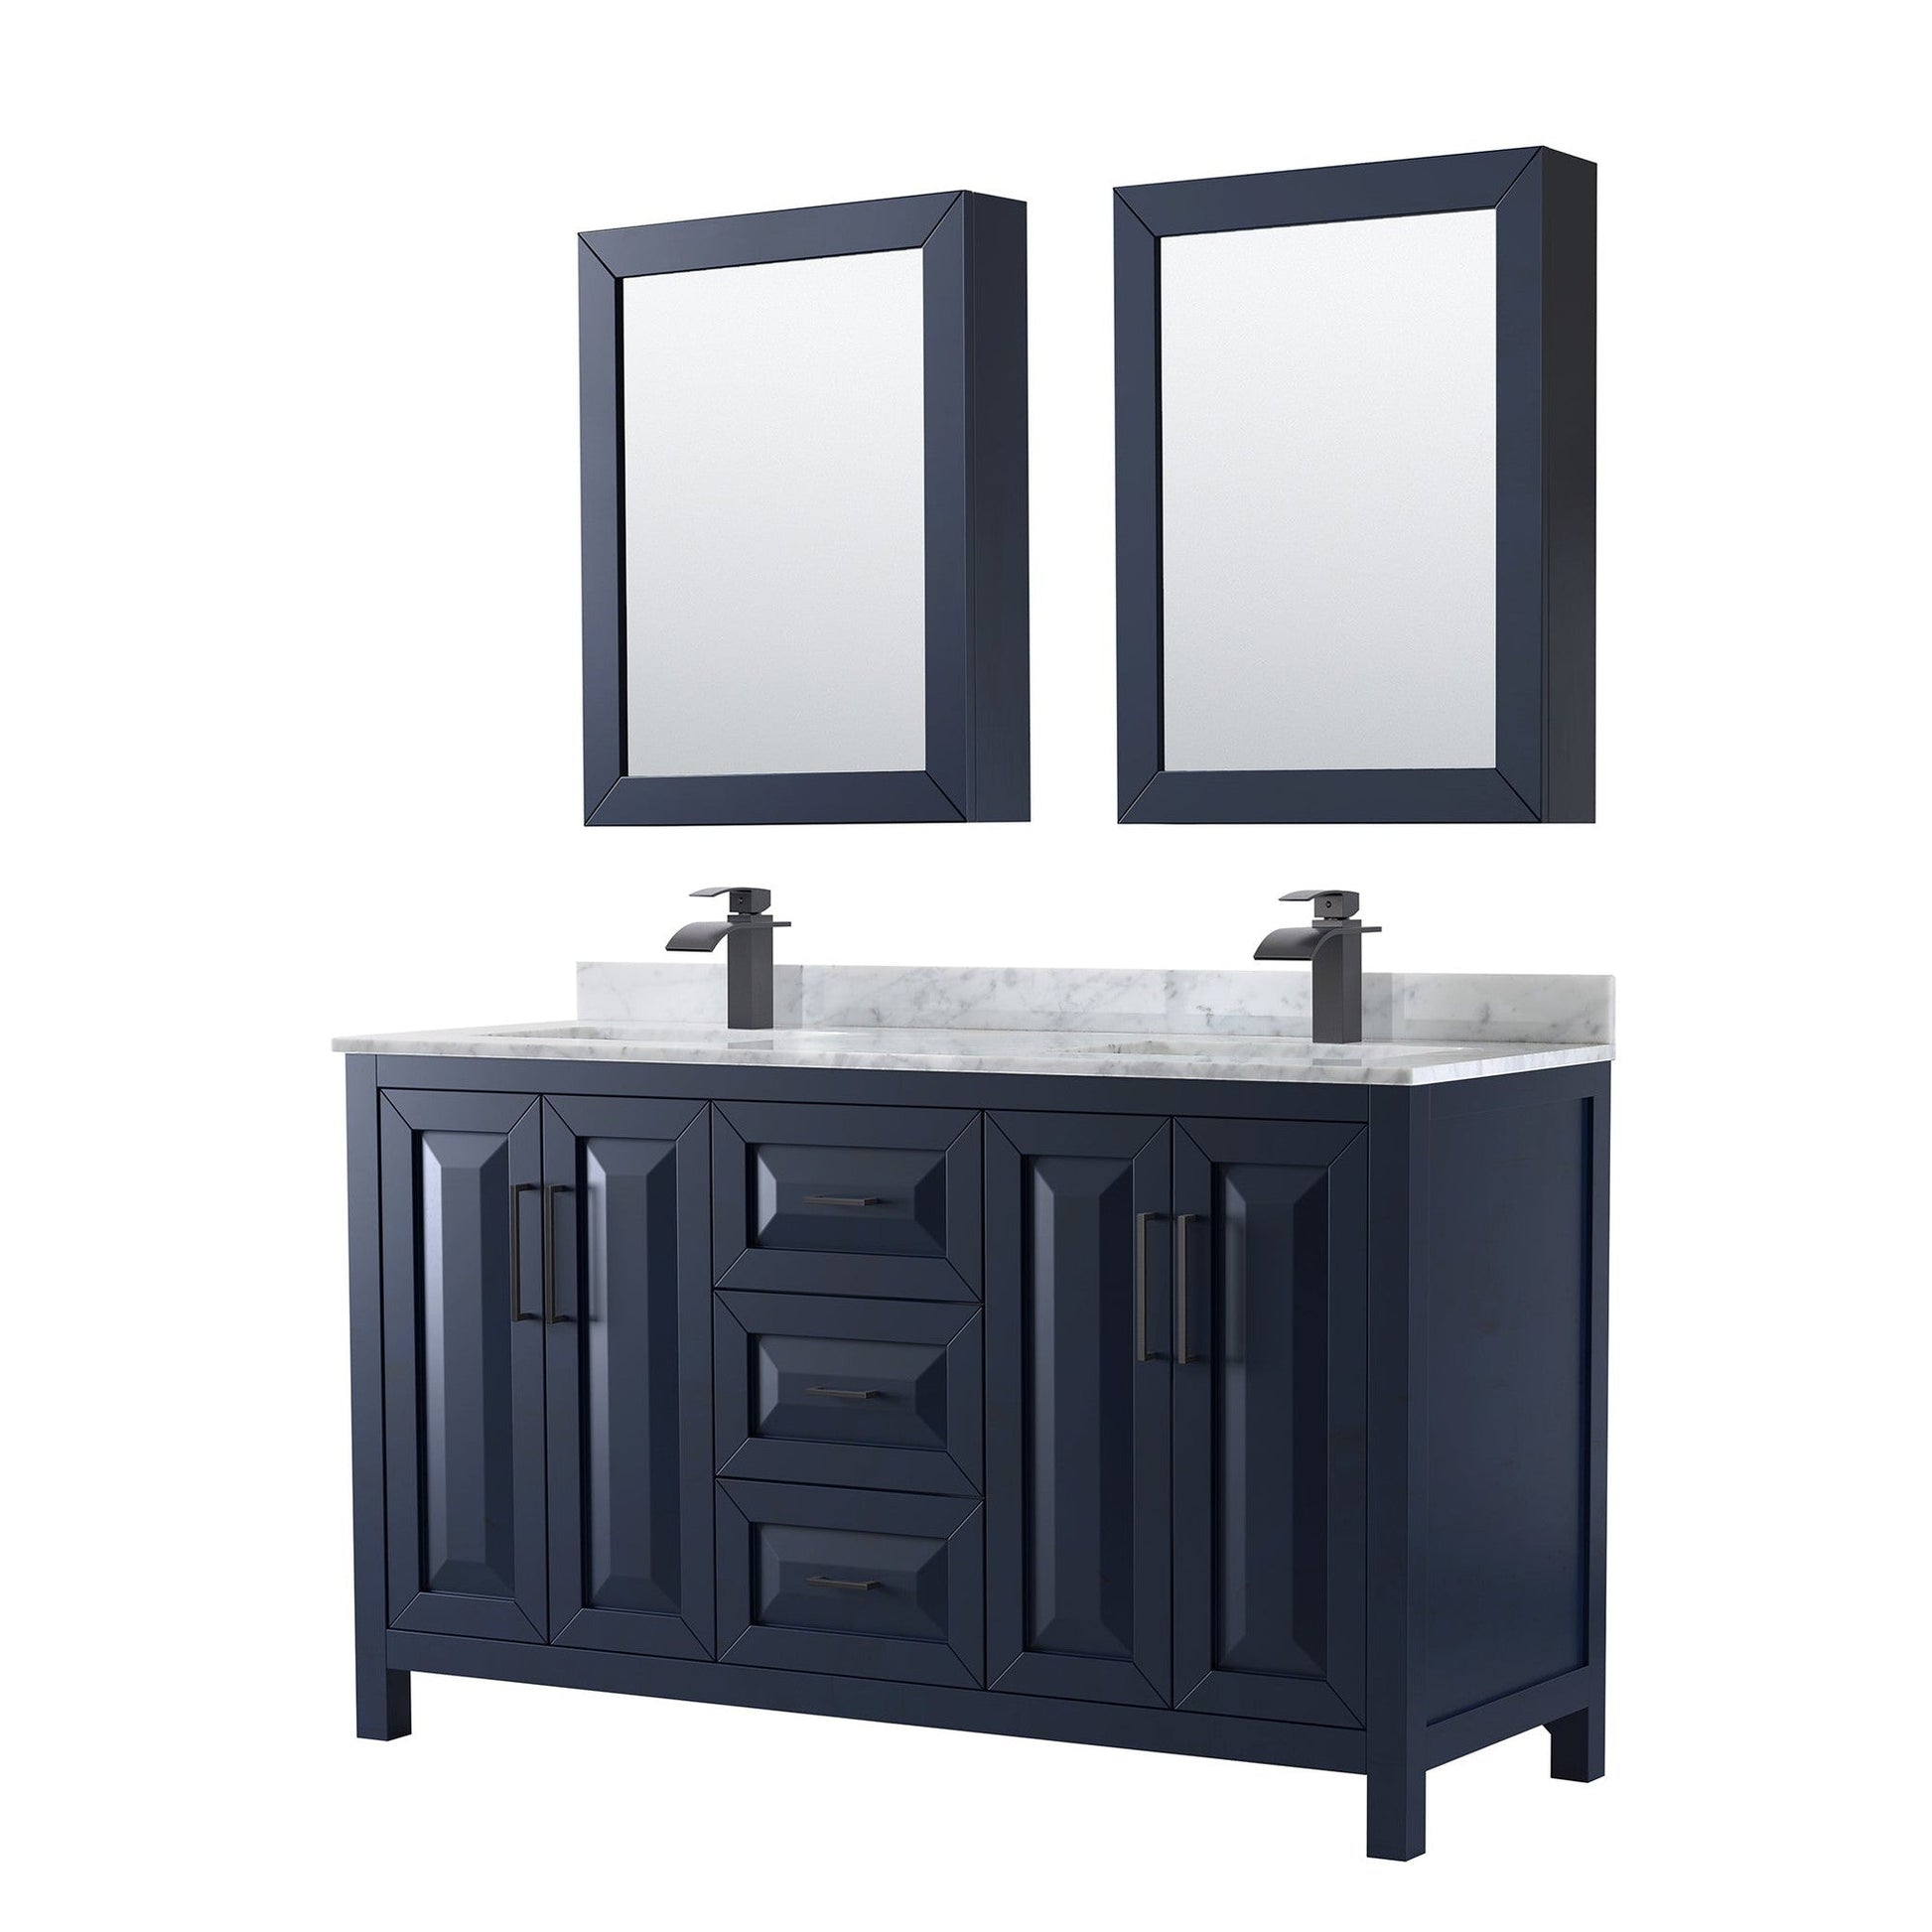 Daria 60" Double Bathroom Vanity in Dark Blue, White Carrara Marble Countertop, Undermount Square Sinks, Matte Black Trim, Medicine Cabinets